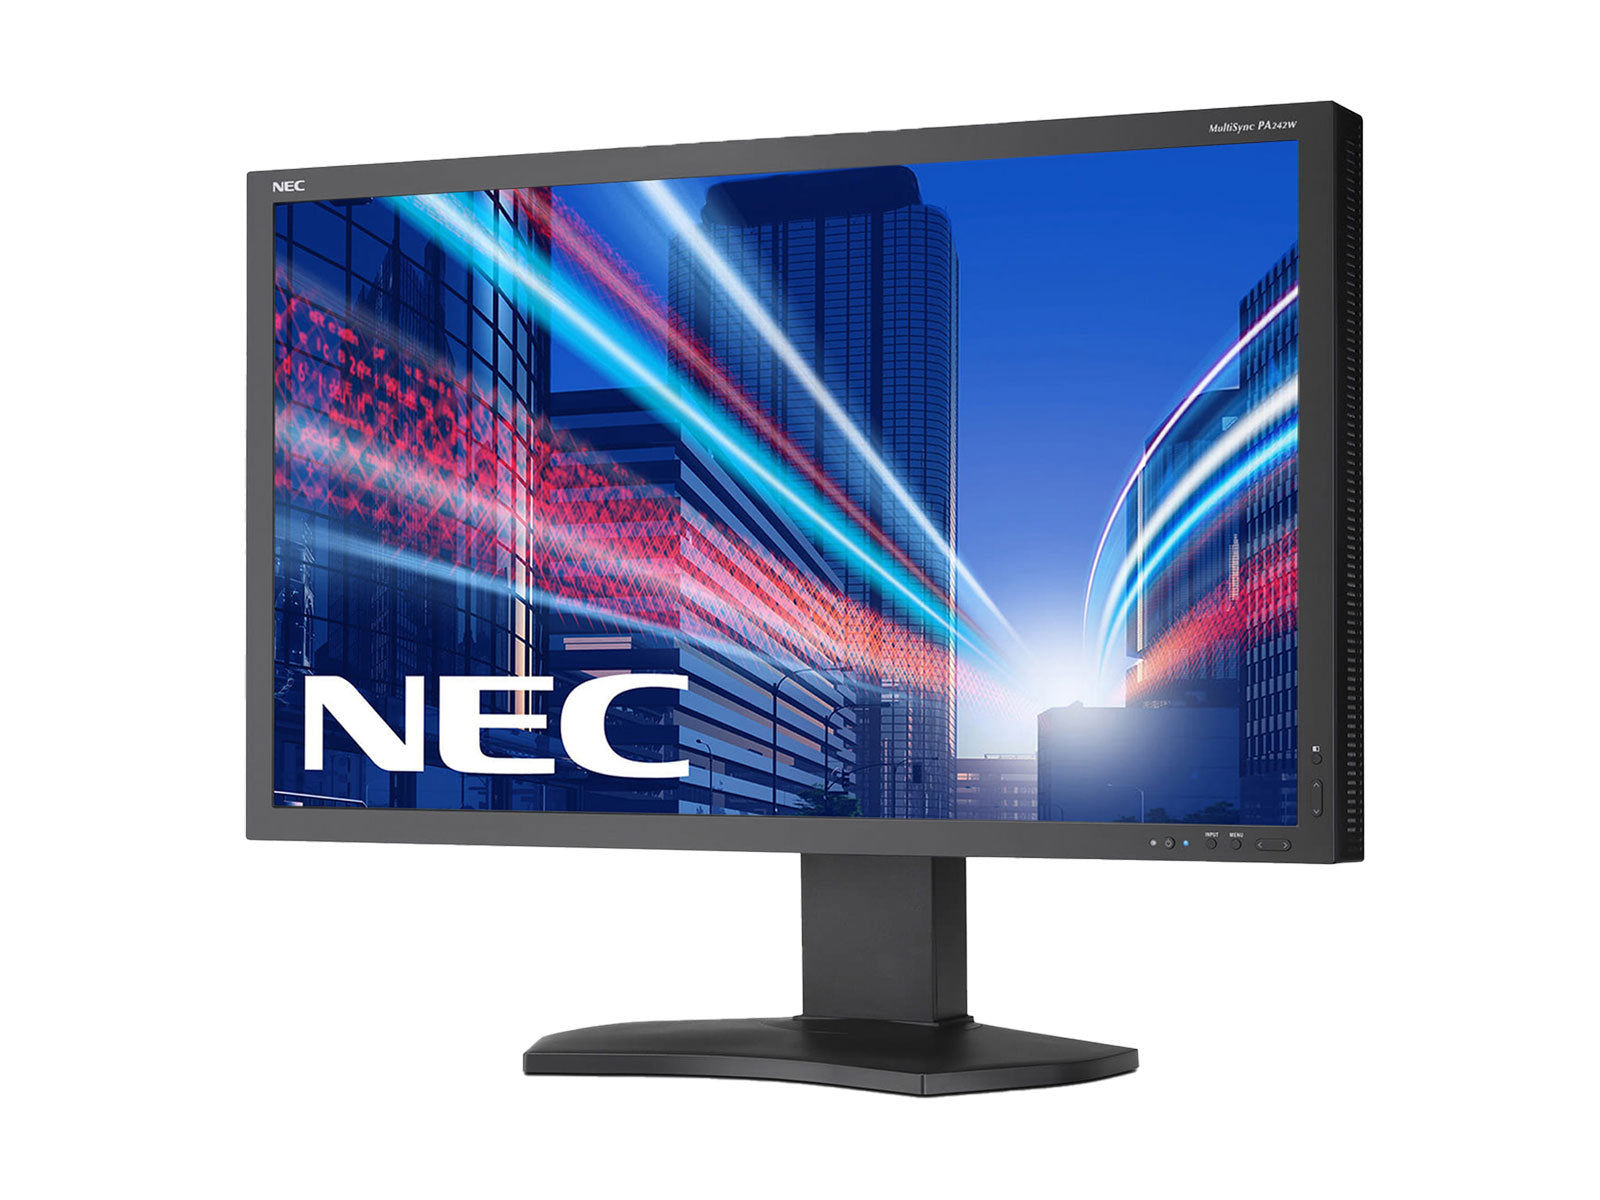 NEC MultiSync PA242W 24" WUXGA 1920 x 1200 Professional Wide Gamut Graphics Display Monitor (PA242W) Monitors.com 